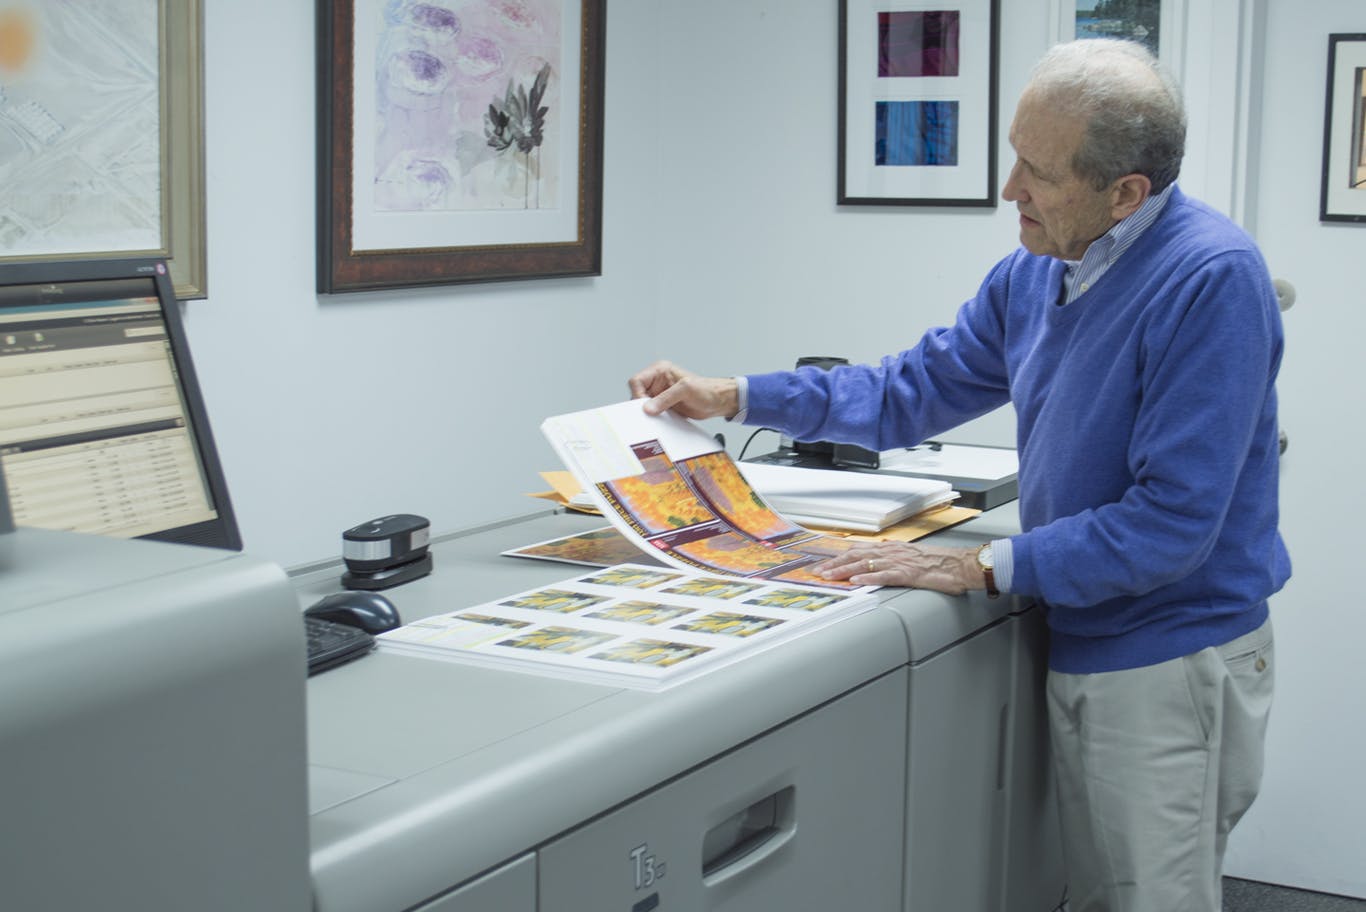 Man looking at printed artwork.